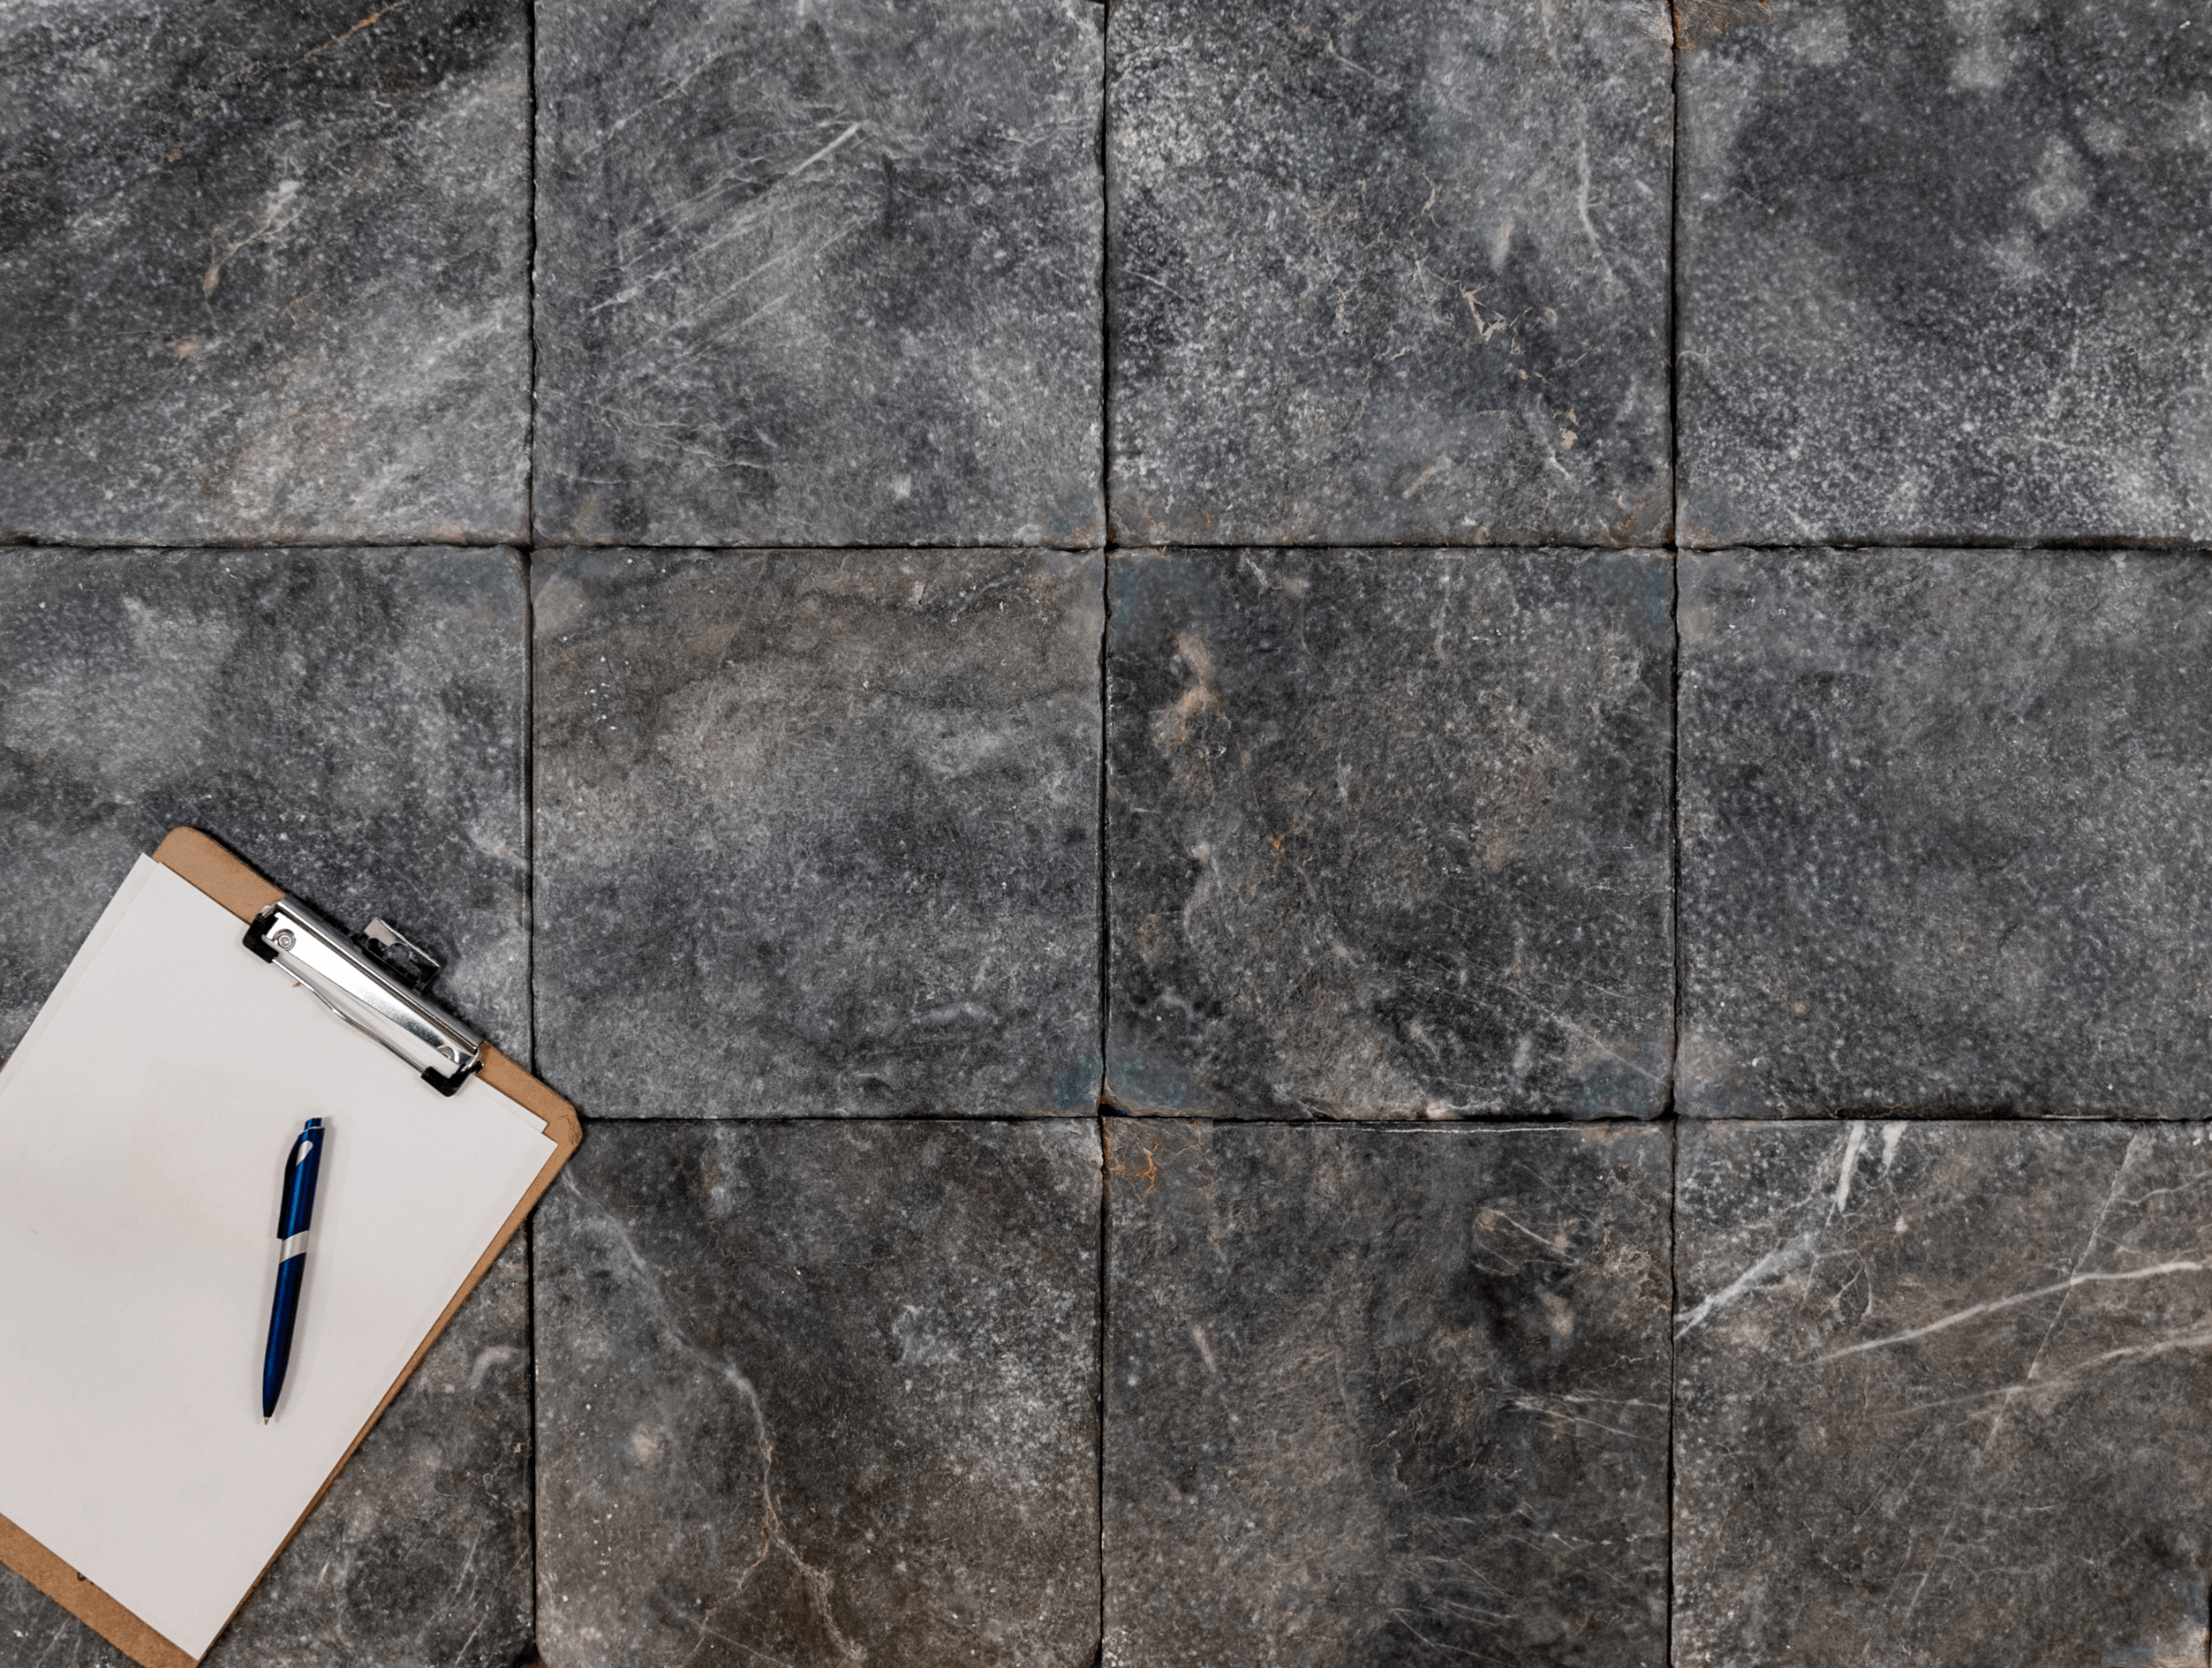 veranda 10x10 marble tile- antiqued gray – Lauren Liess